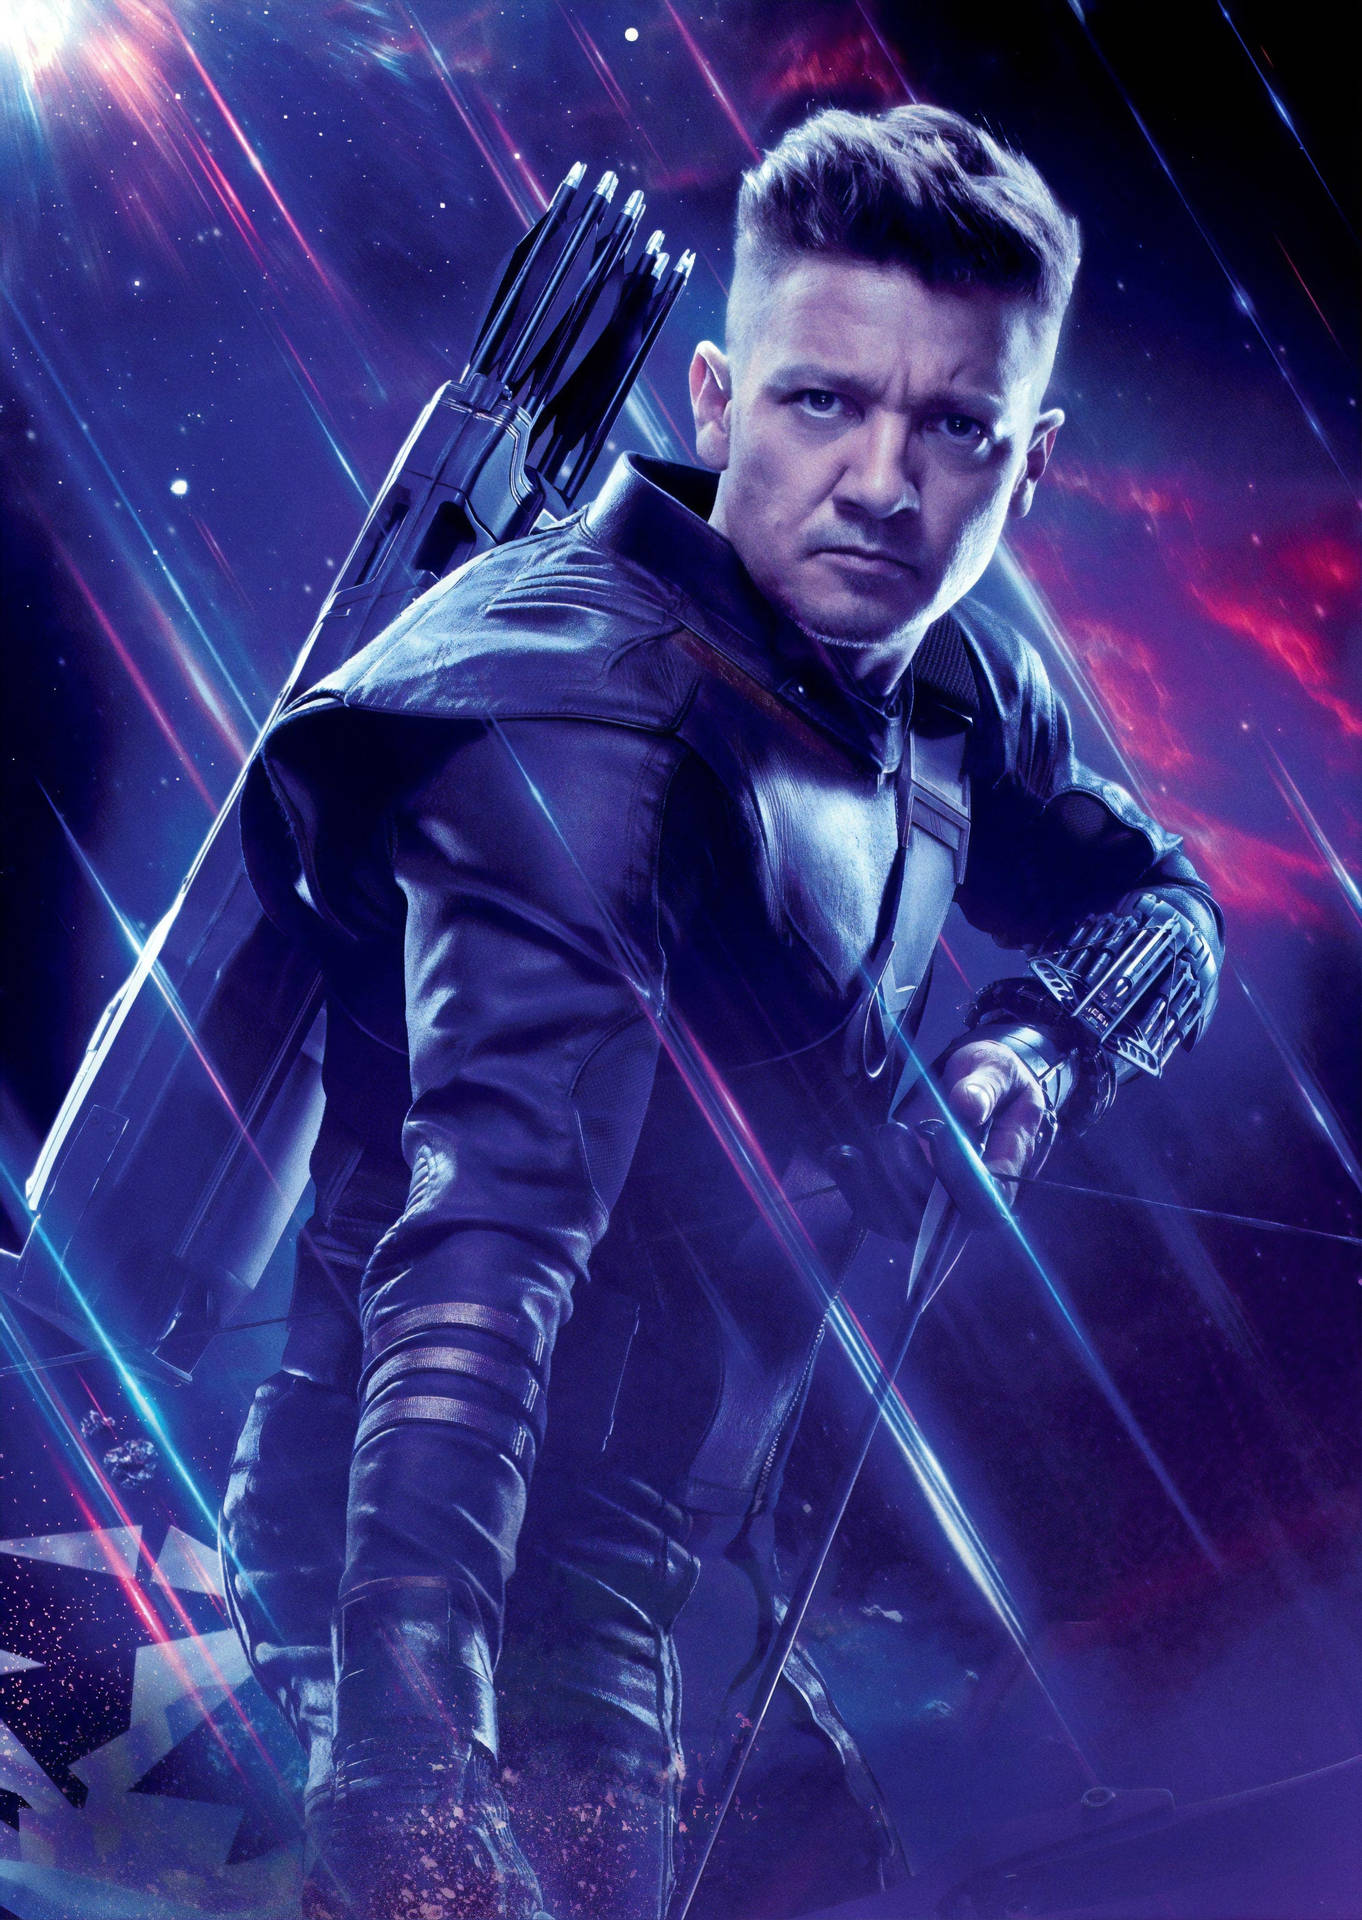 Hawkeye Avengers Endgame Poster Background